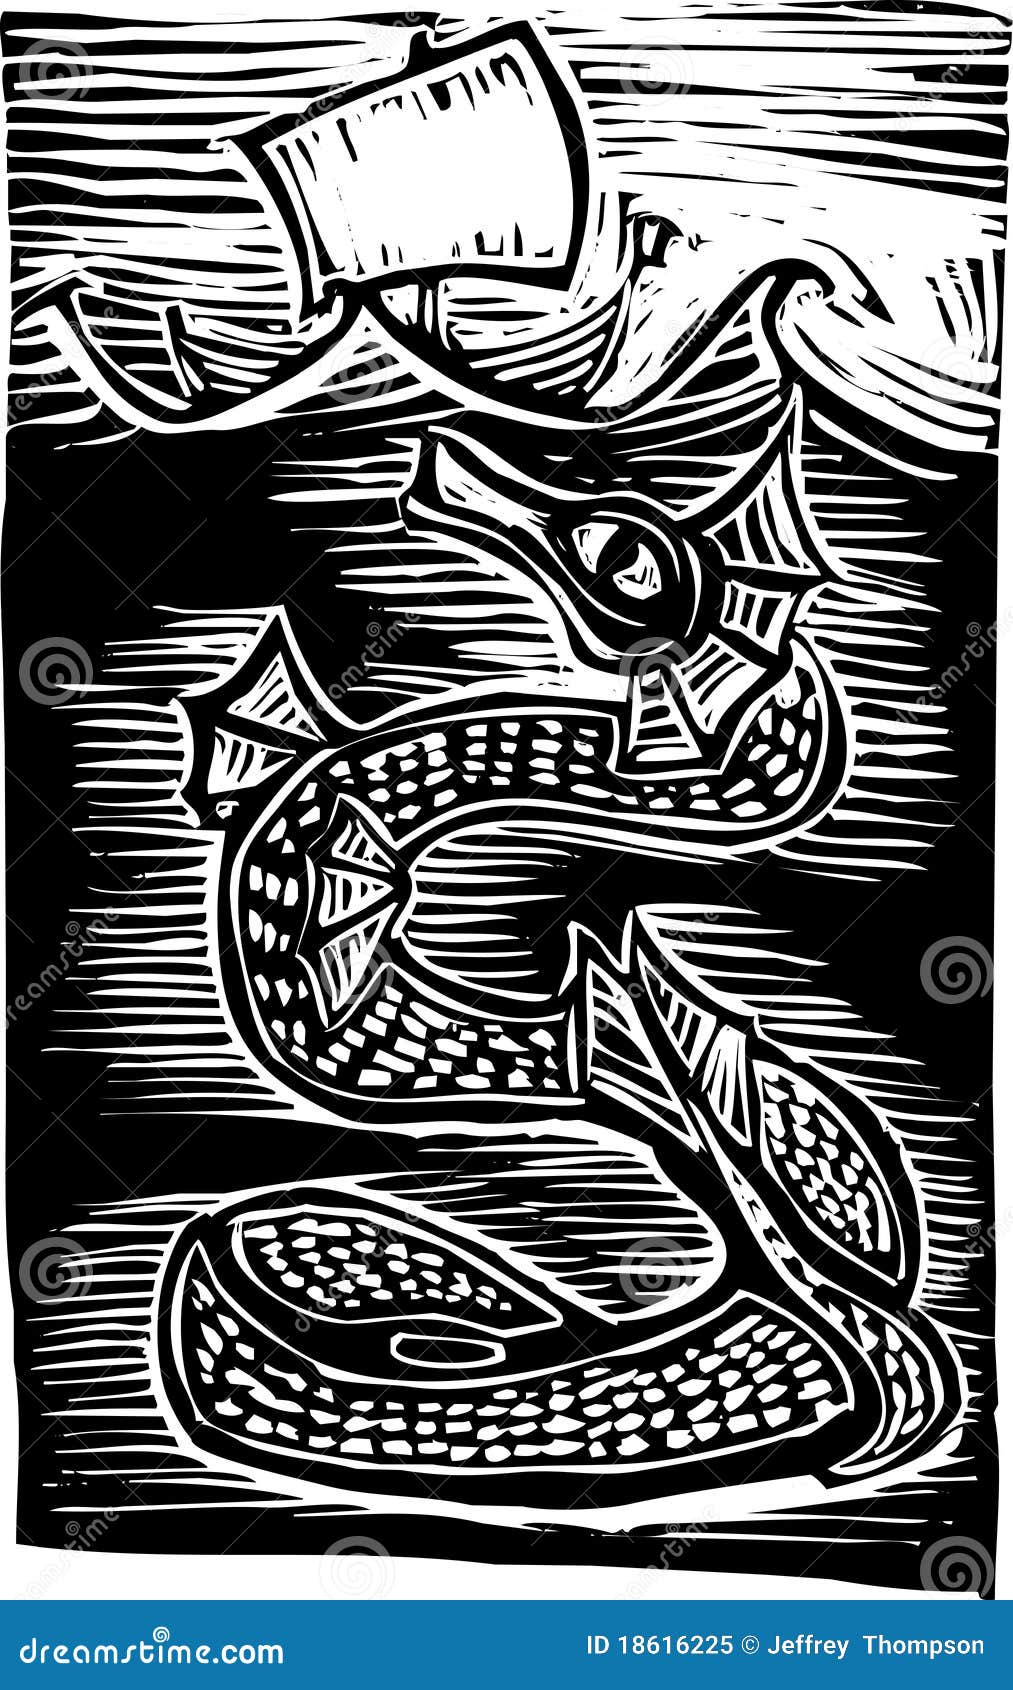 sea serpent